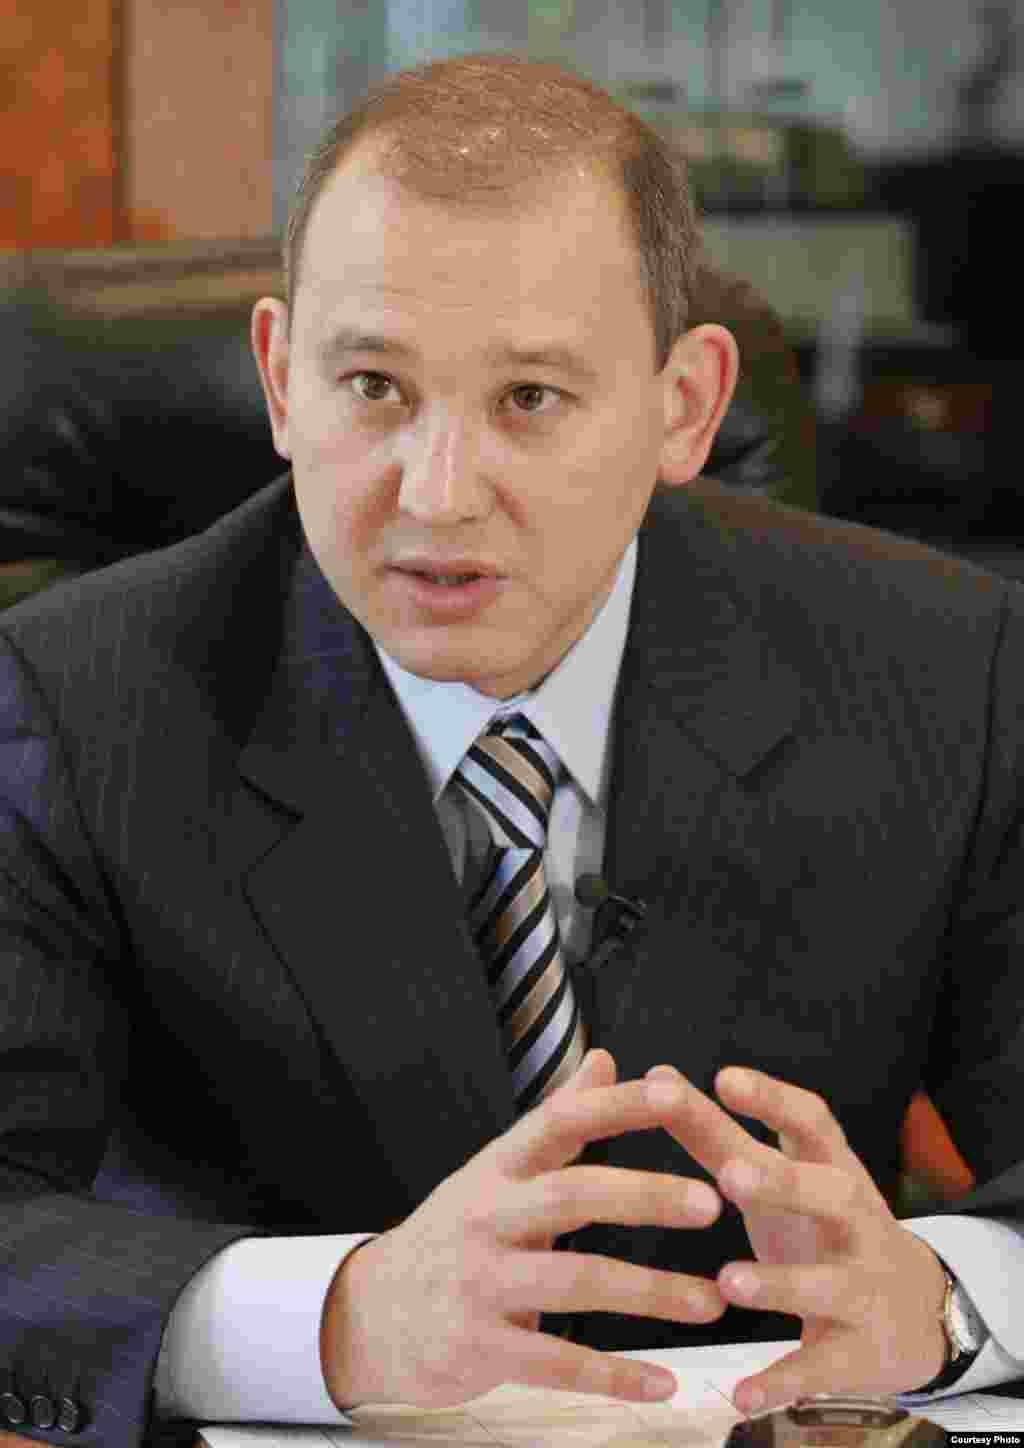 Kazakhstan - Mukhtar Dzhakishev, Zhakishev. President of Kazatomprom company, 02Apr2009 - Мухтар Джакишев, президент компании "Казатомпром". 